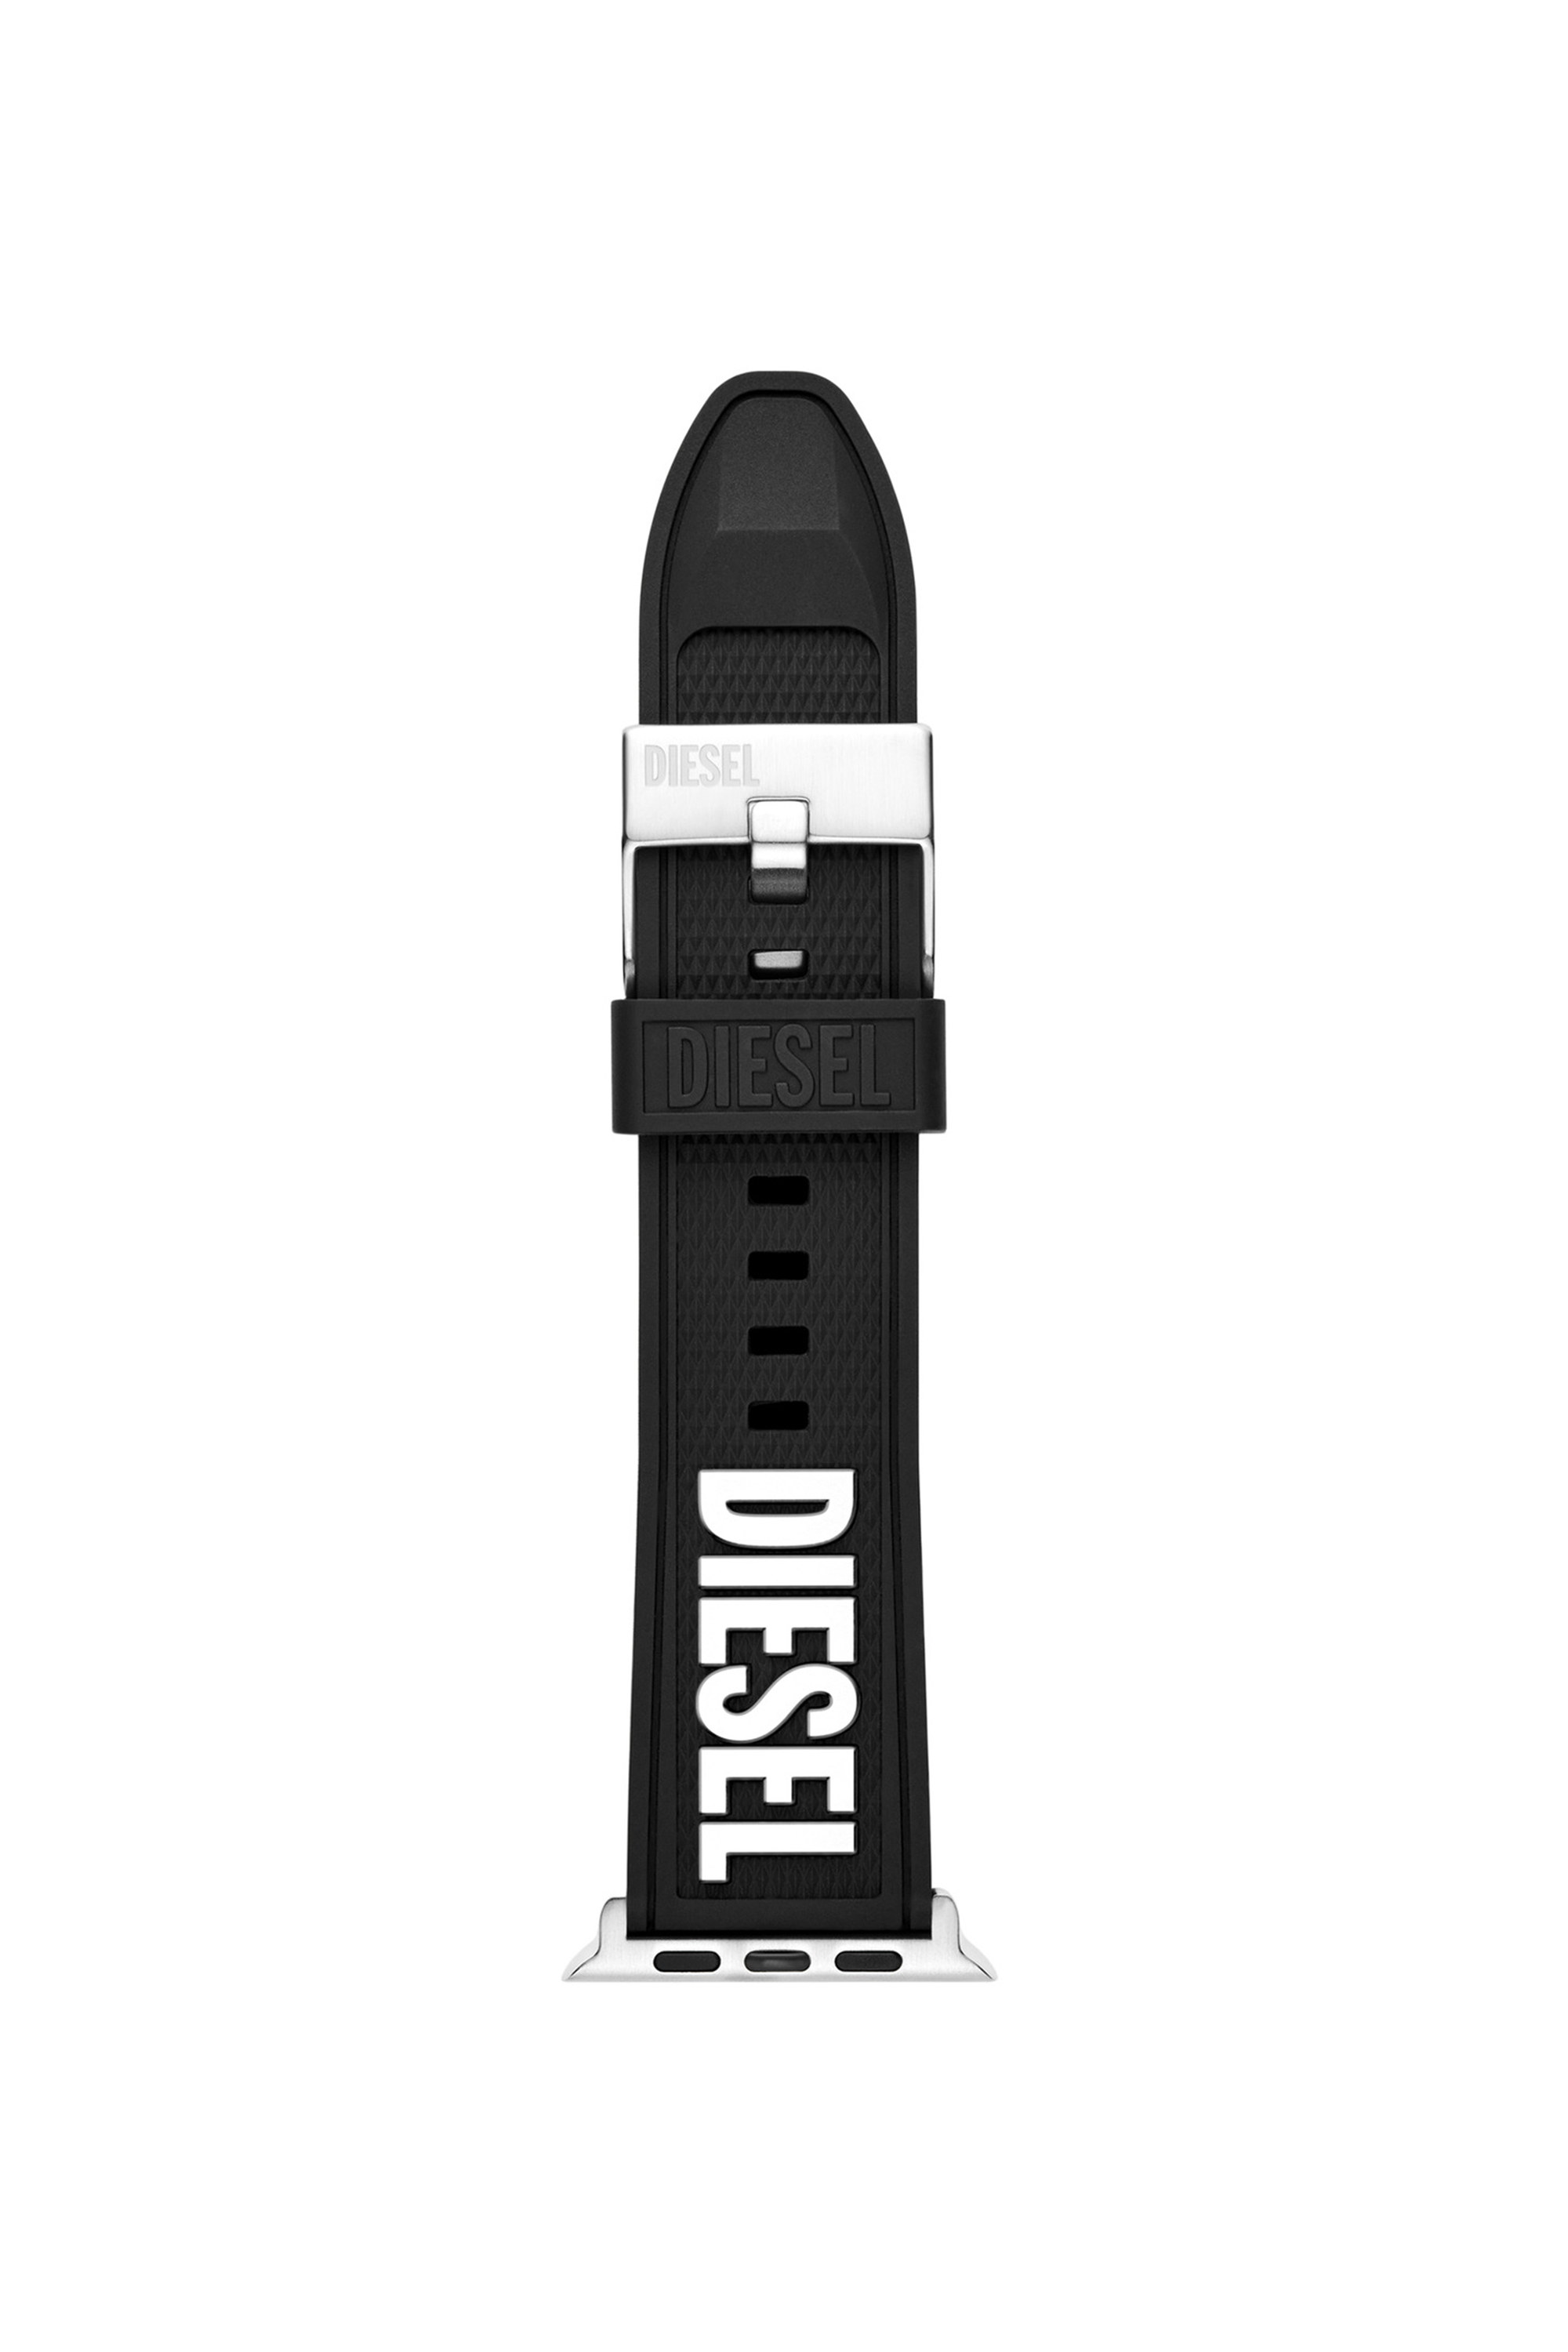 Diesel - Cinturino in silicone per Apple Watch, 42mm, 44mm, e 45mm. - Accessori Smartwatches - Unisex - Nero